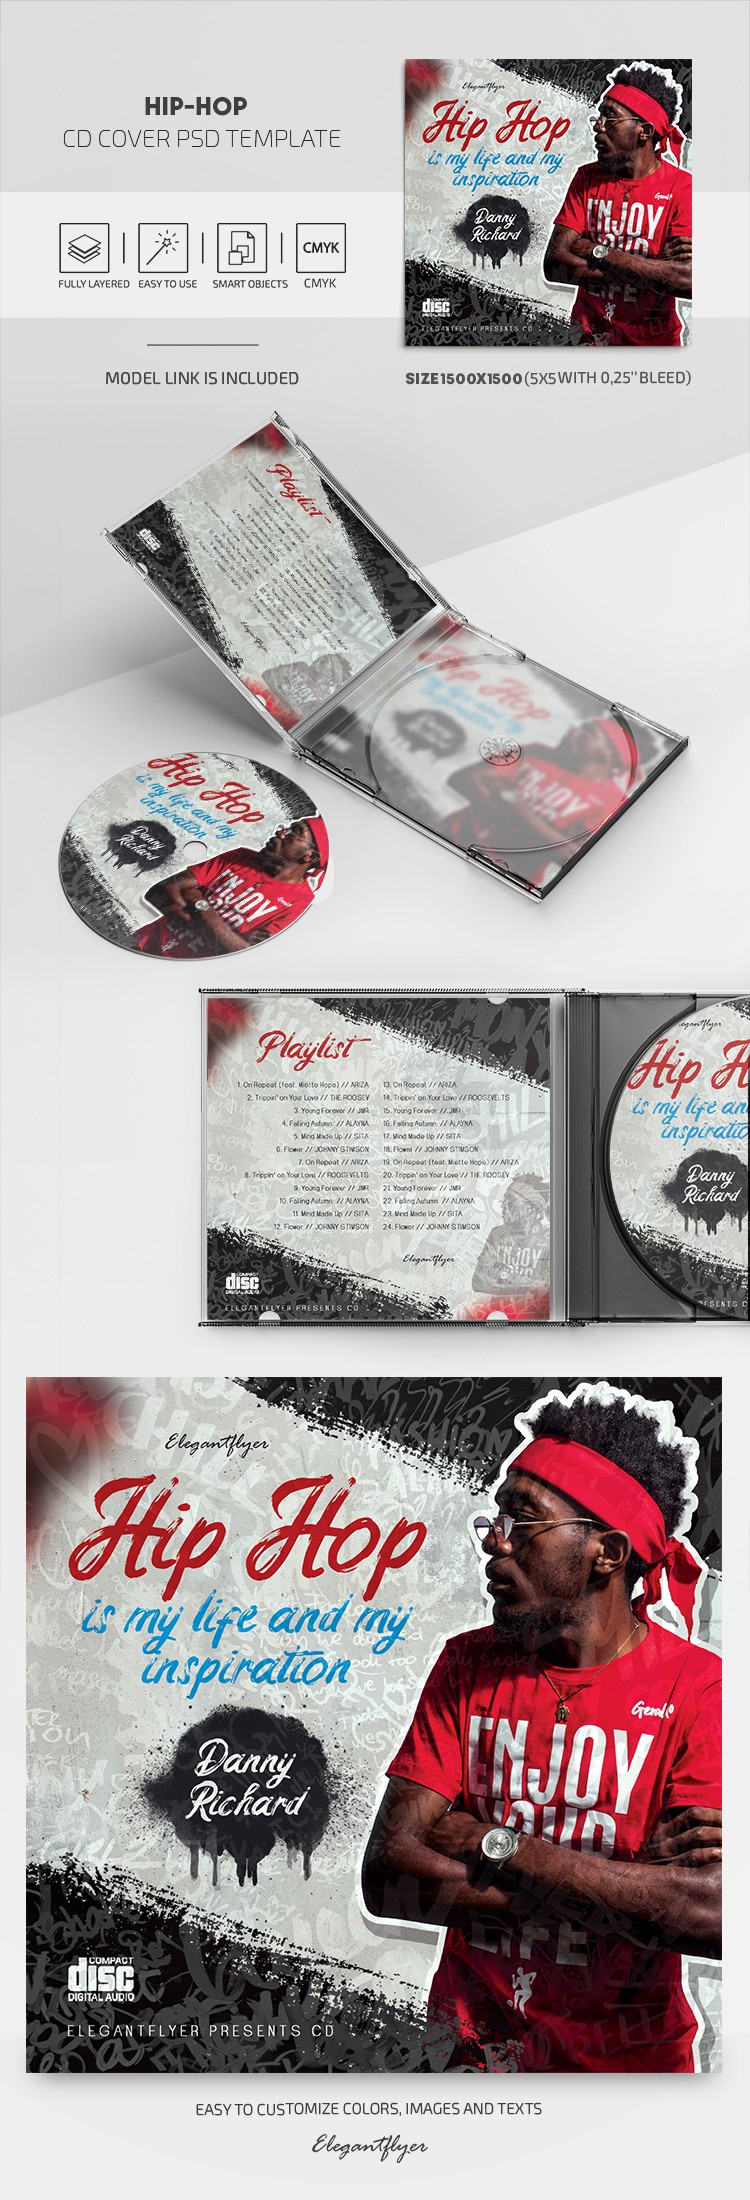 Portada de CD de Hip Hop by ElegantFlyer